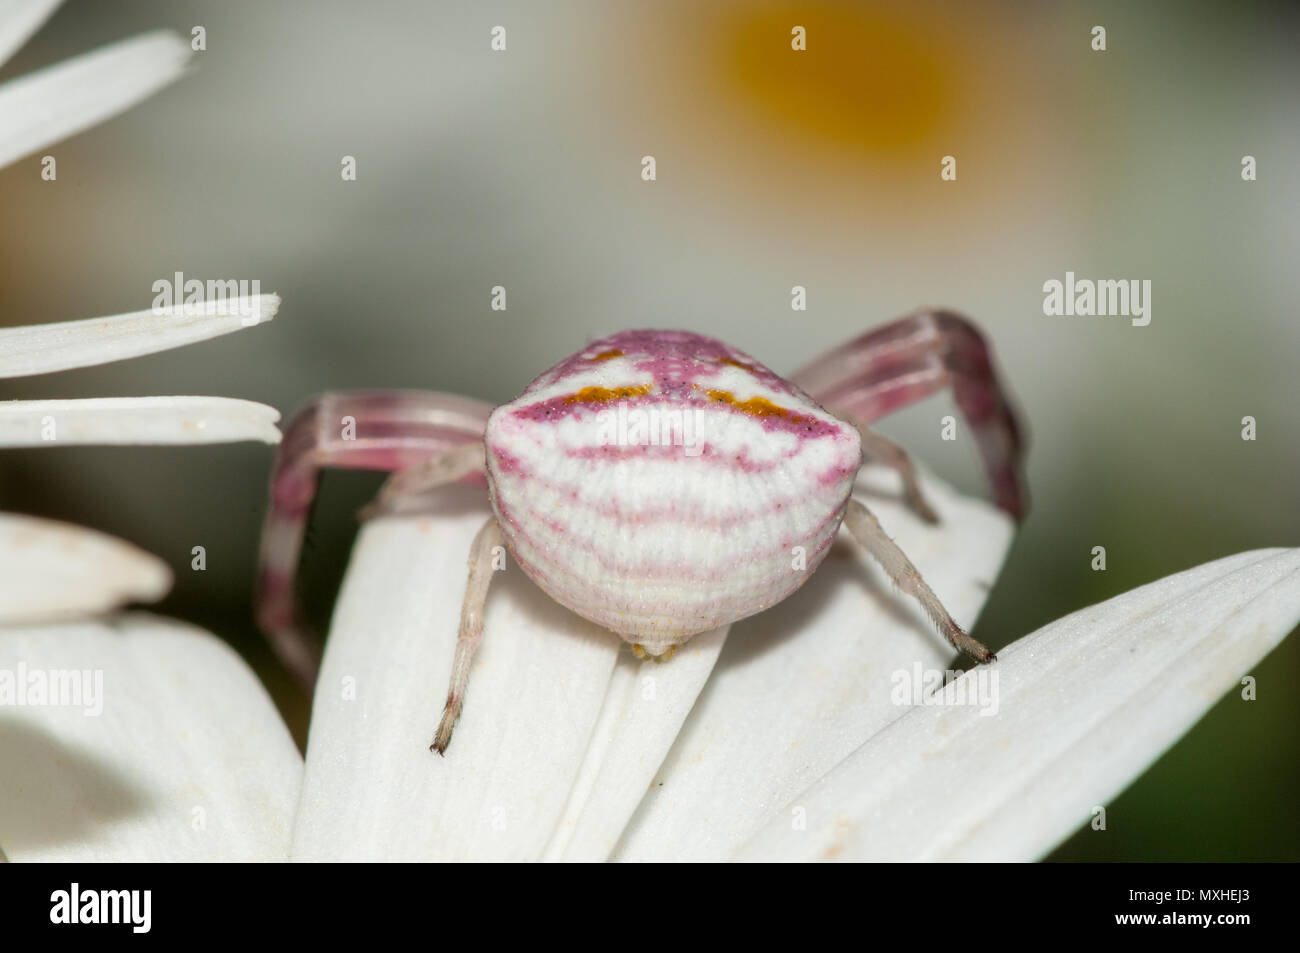 crab spider, Thomisus onustus, on a daisy flower Stock Photo